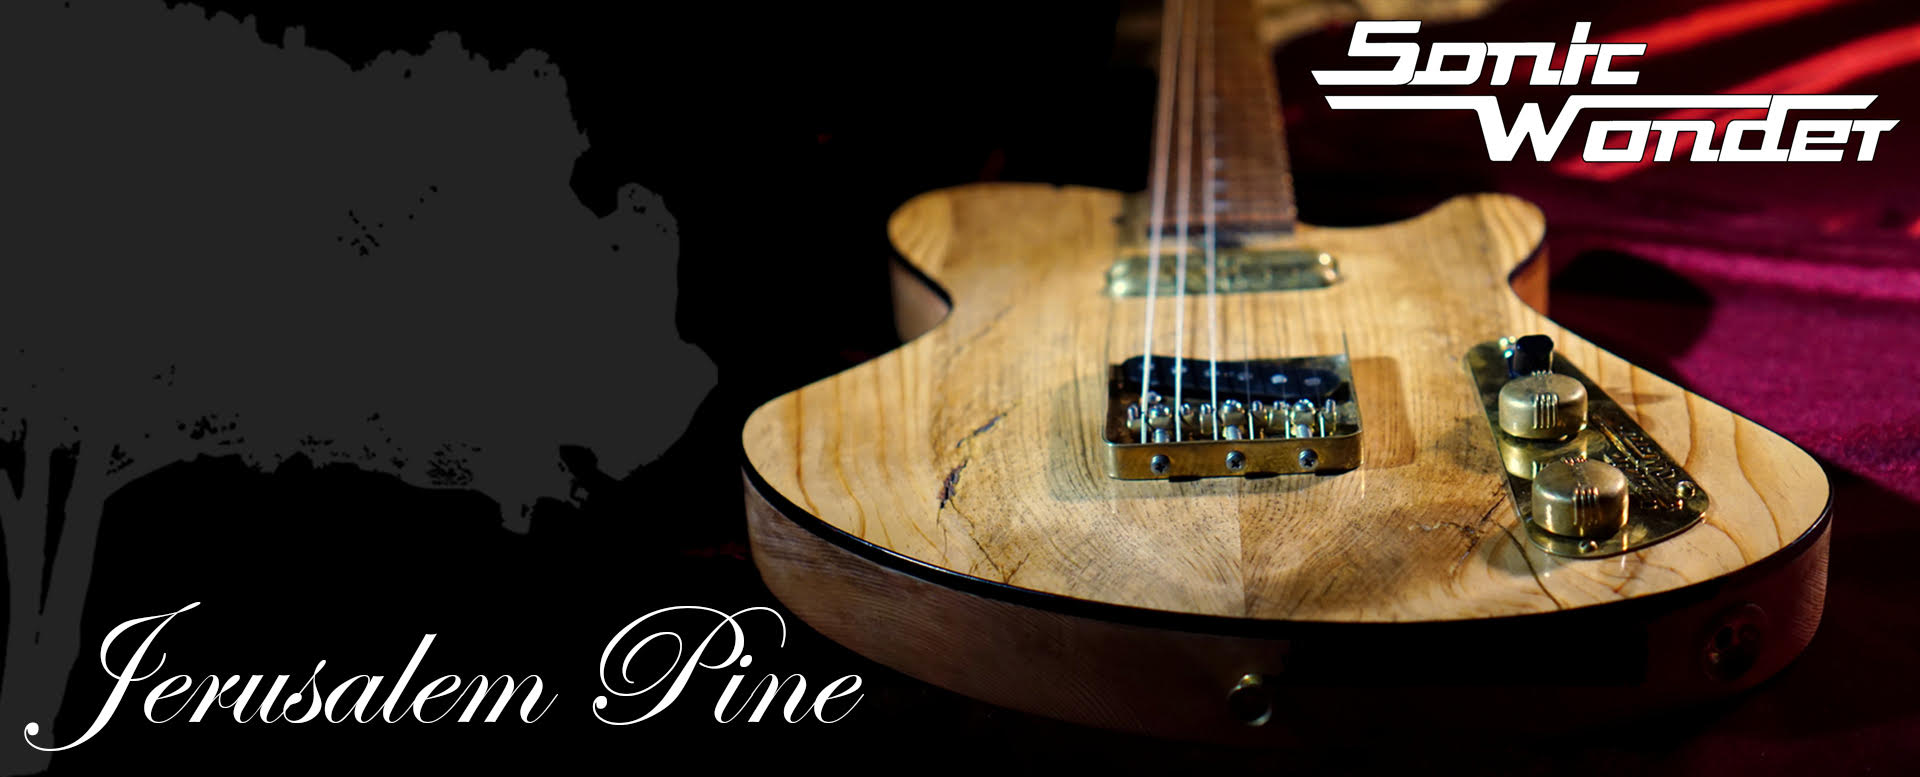 Handmade Guitar from Jerusalem Pine - Sonic Wonder Guitar by Tone Revival Guitars